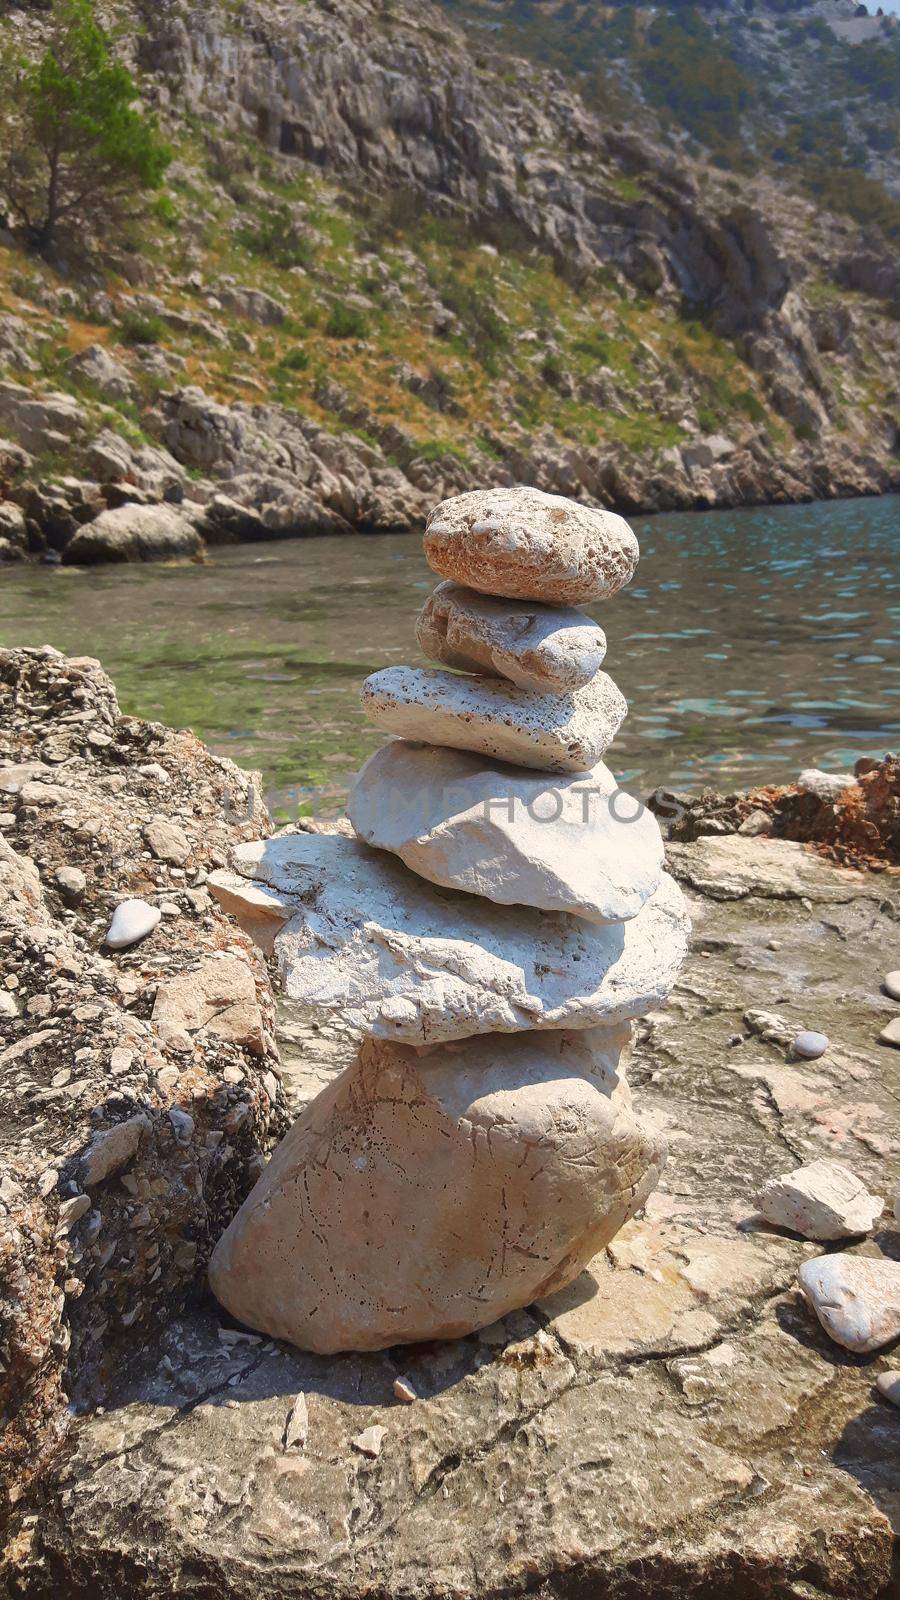 balanced Zen rocks art stacked in flowing water stream by banate